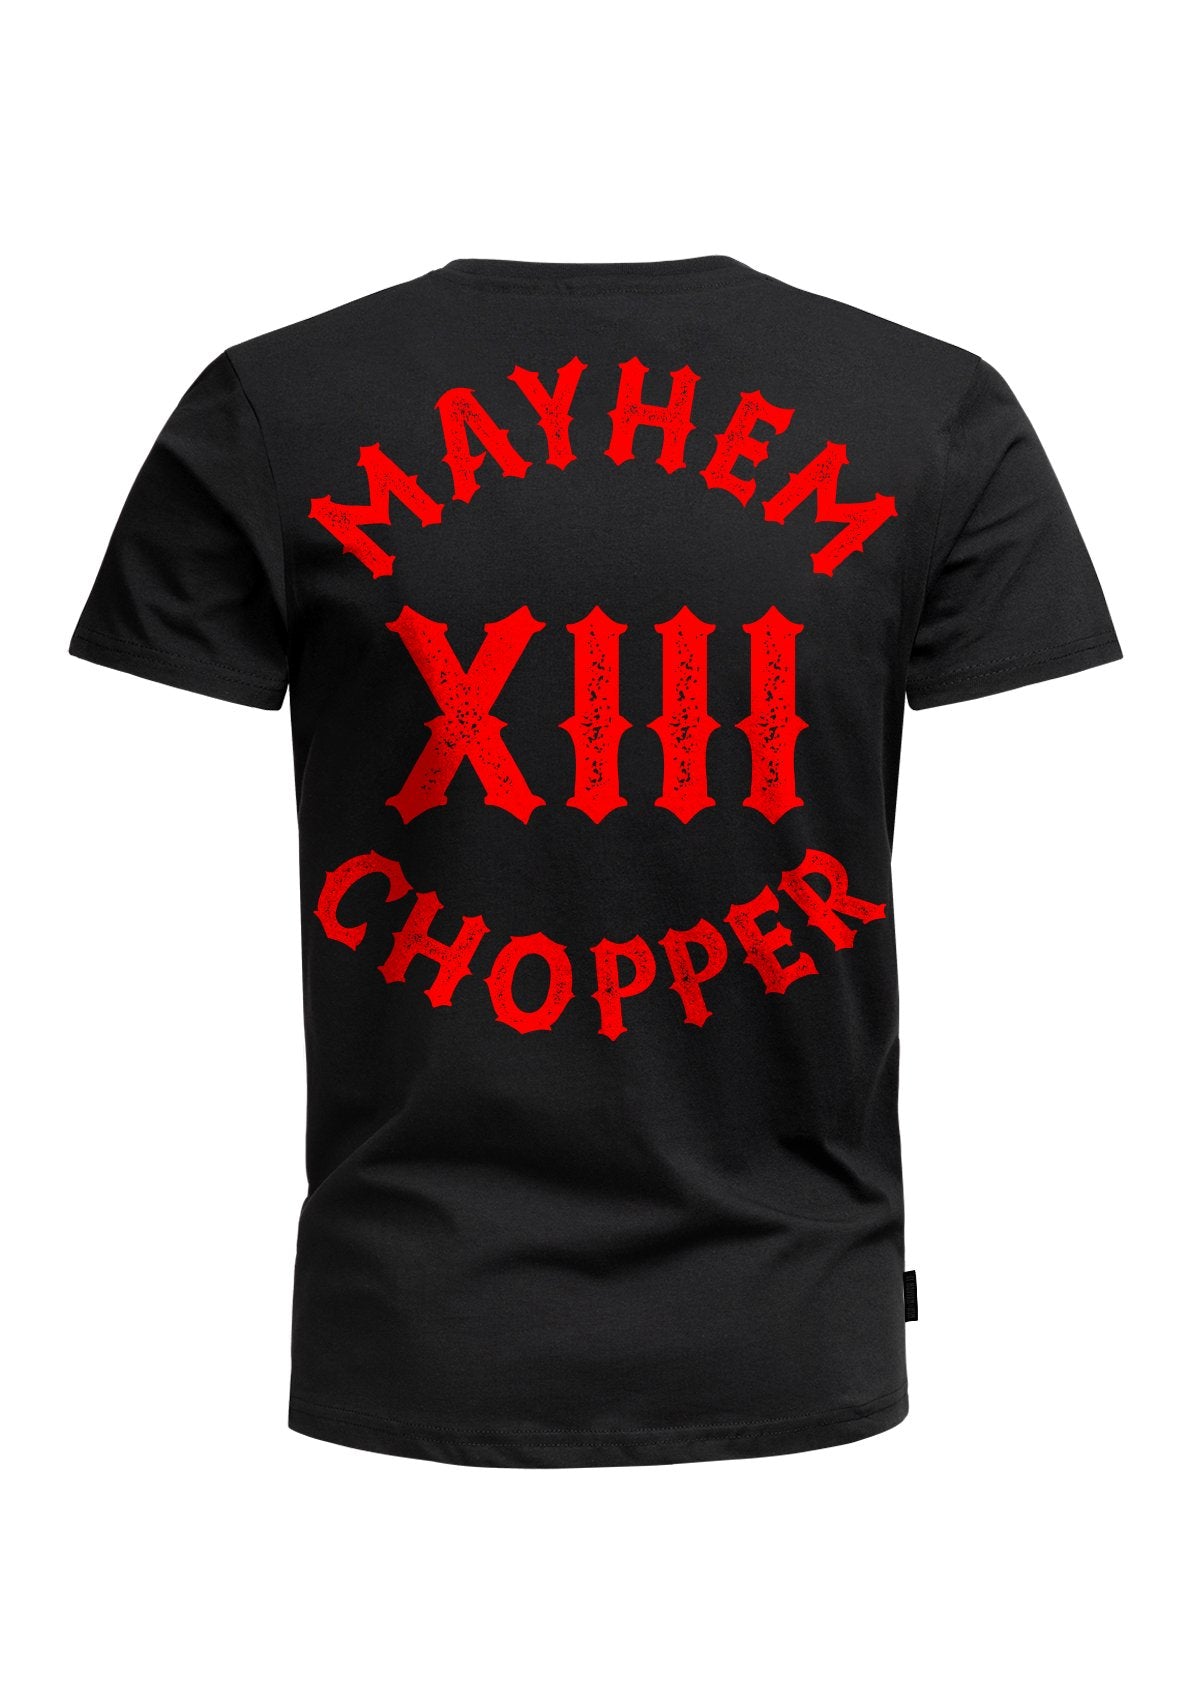 T-Shirt Mayhem Chopper XIII S/R - MEN OF MAYHEM - ALAIKO-EXCHANGES-MM-M-1010-MX-SR - black - Chopper